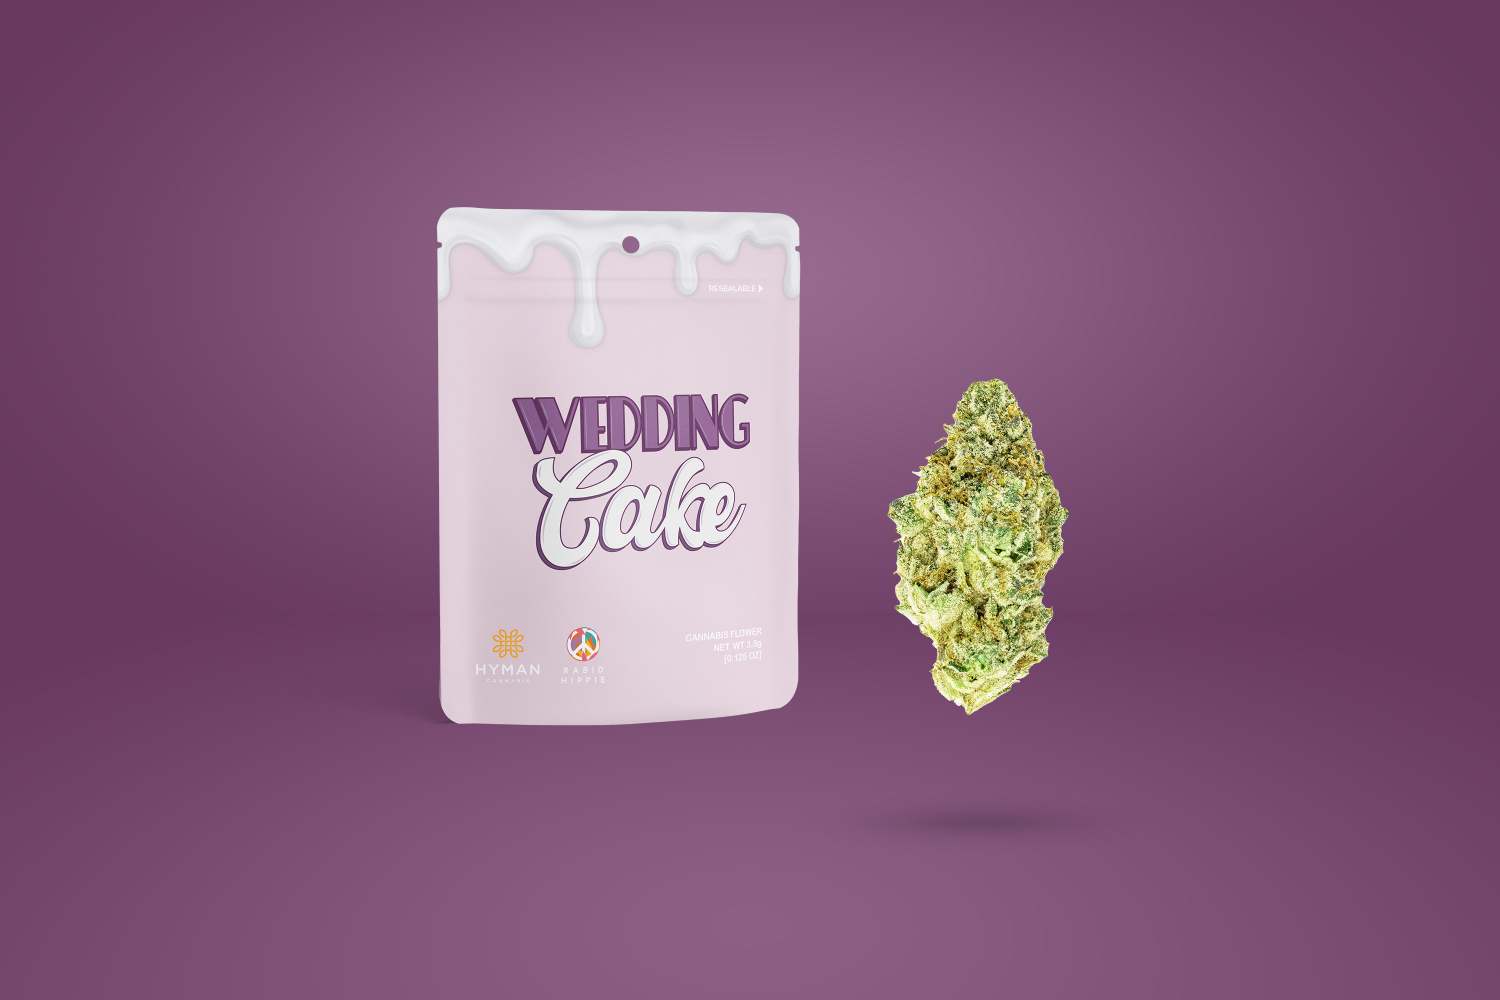 Wedding Cake, Weed Buds, Hyman Cannabis Strain